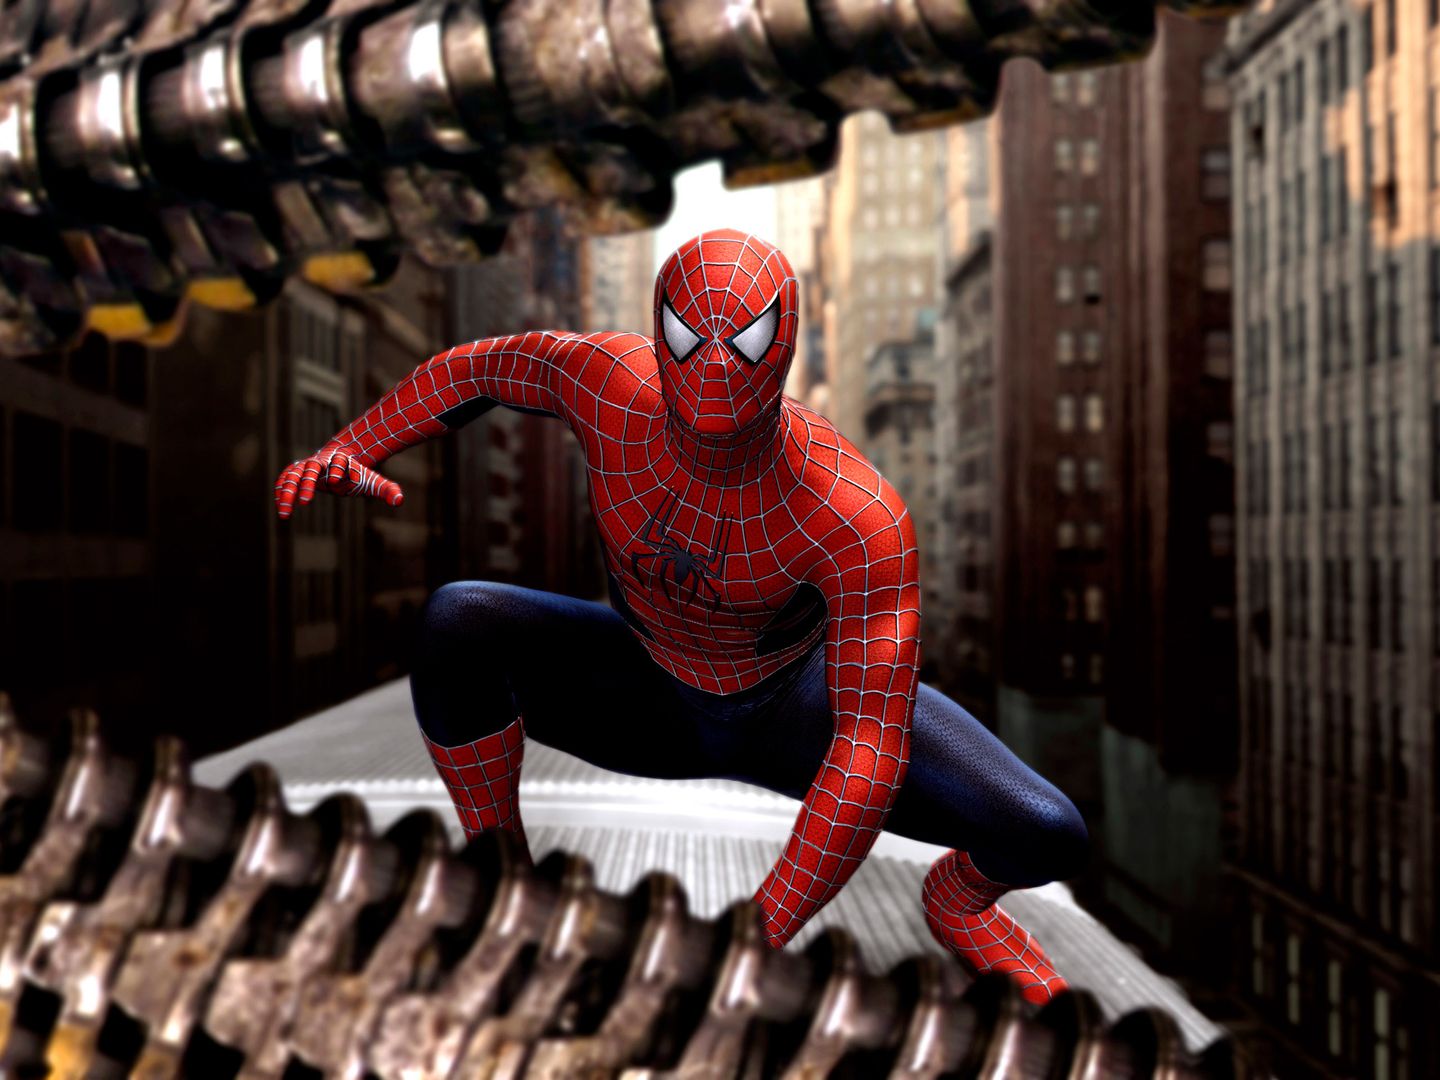 Китайский человек паук. Spider man 2 Тоби Магуайр. Человек паук 2004. Spider man 2 Tobey Maguire.